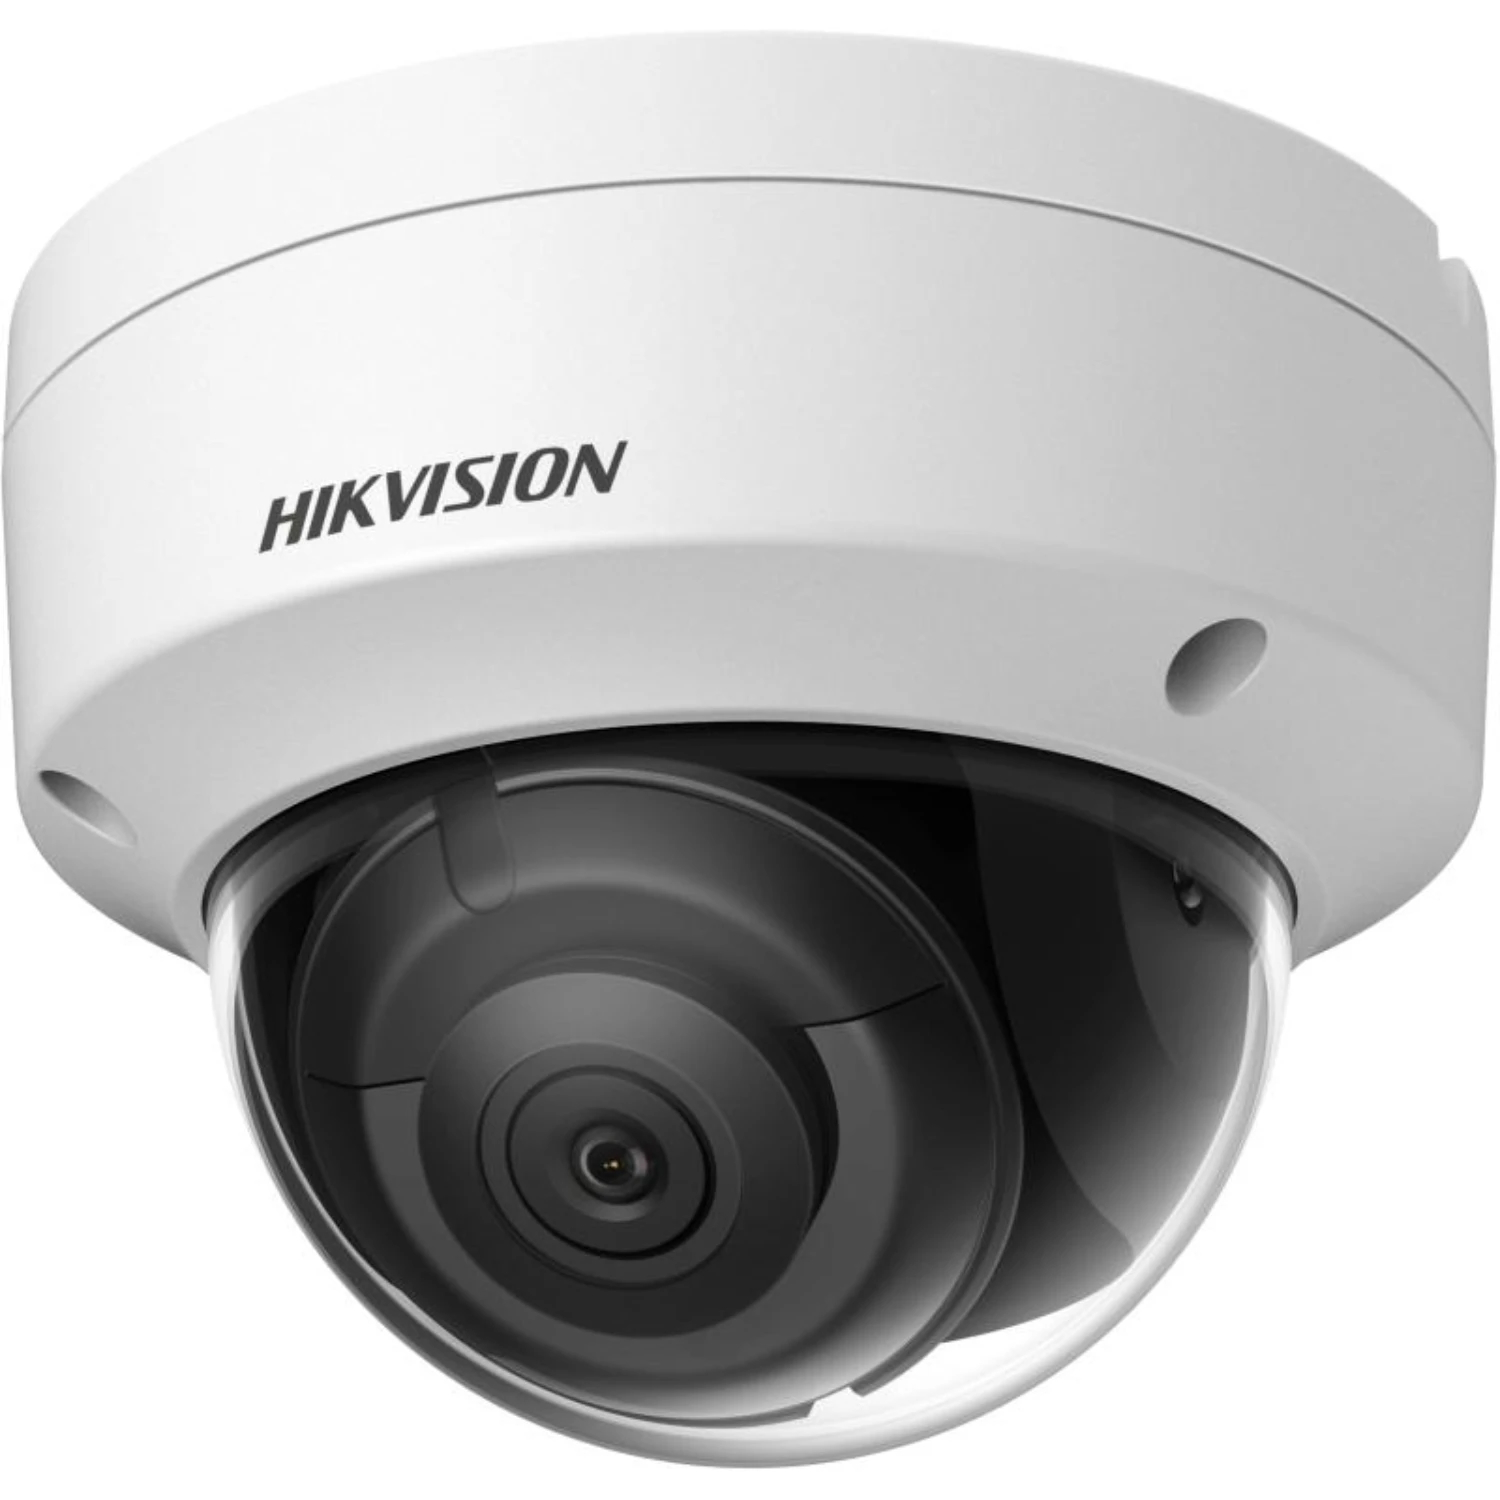 20001198 Hikvision EasyIP 4.0 AcuSense 8MP IR Dome IP Camera, 2.8mm